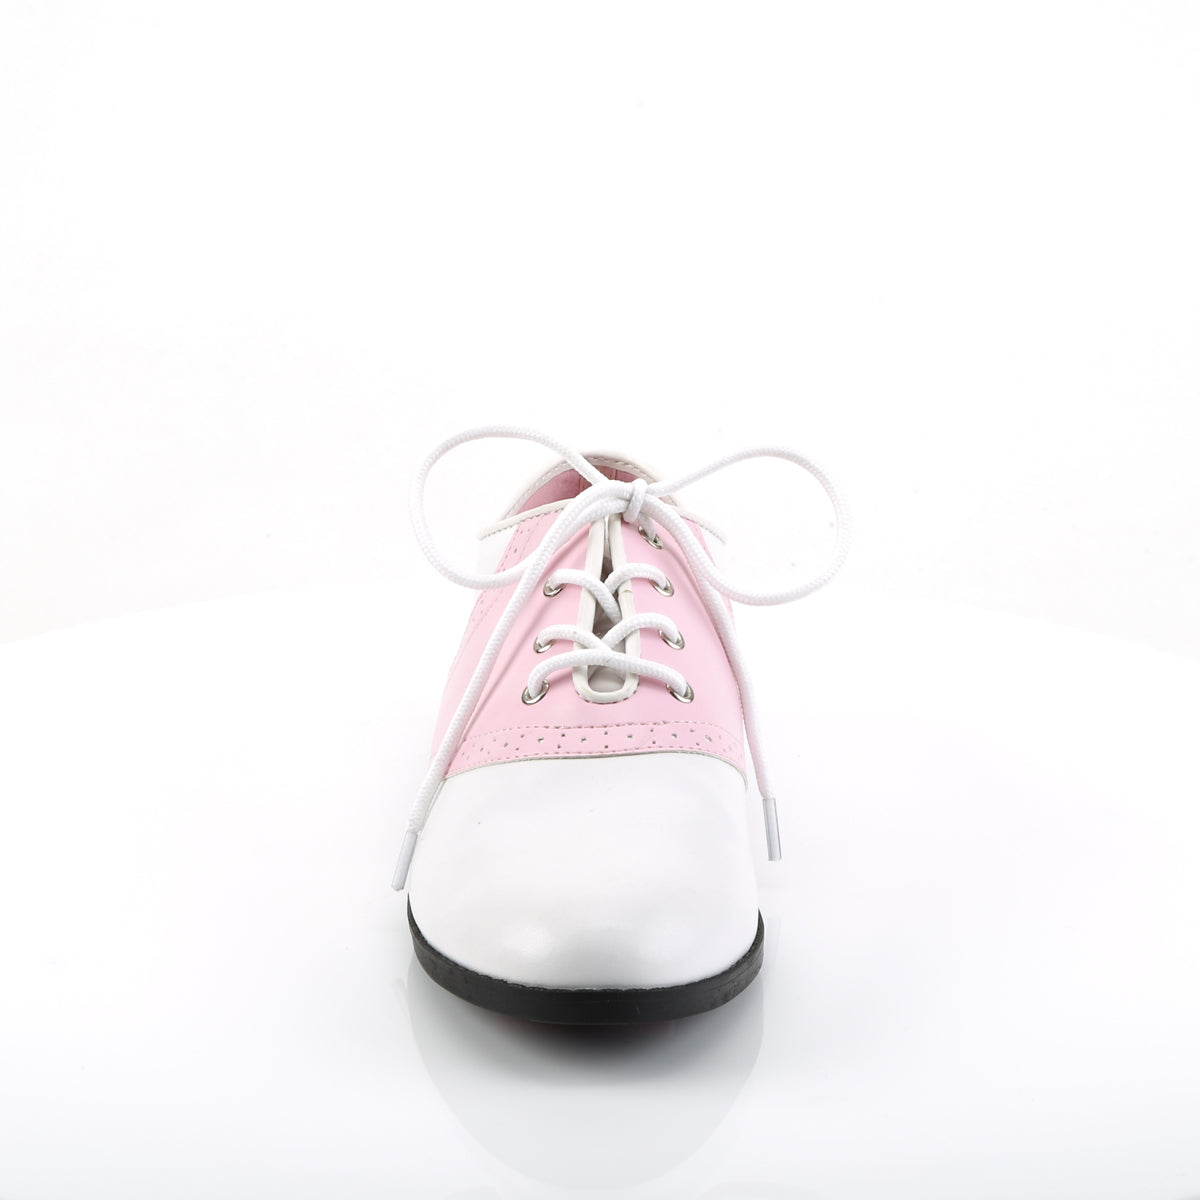 SADDLE-50 Funtasma Baby Pink Women's Costume Shoes Funtasma Costume Shoes Alternative Footwear